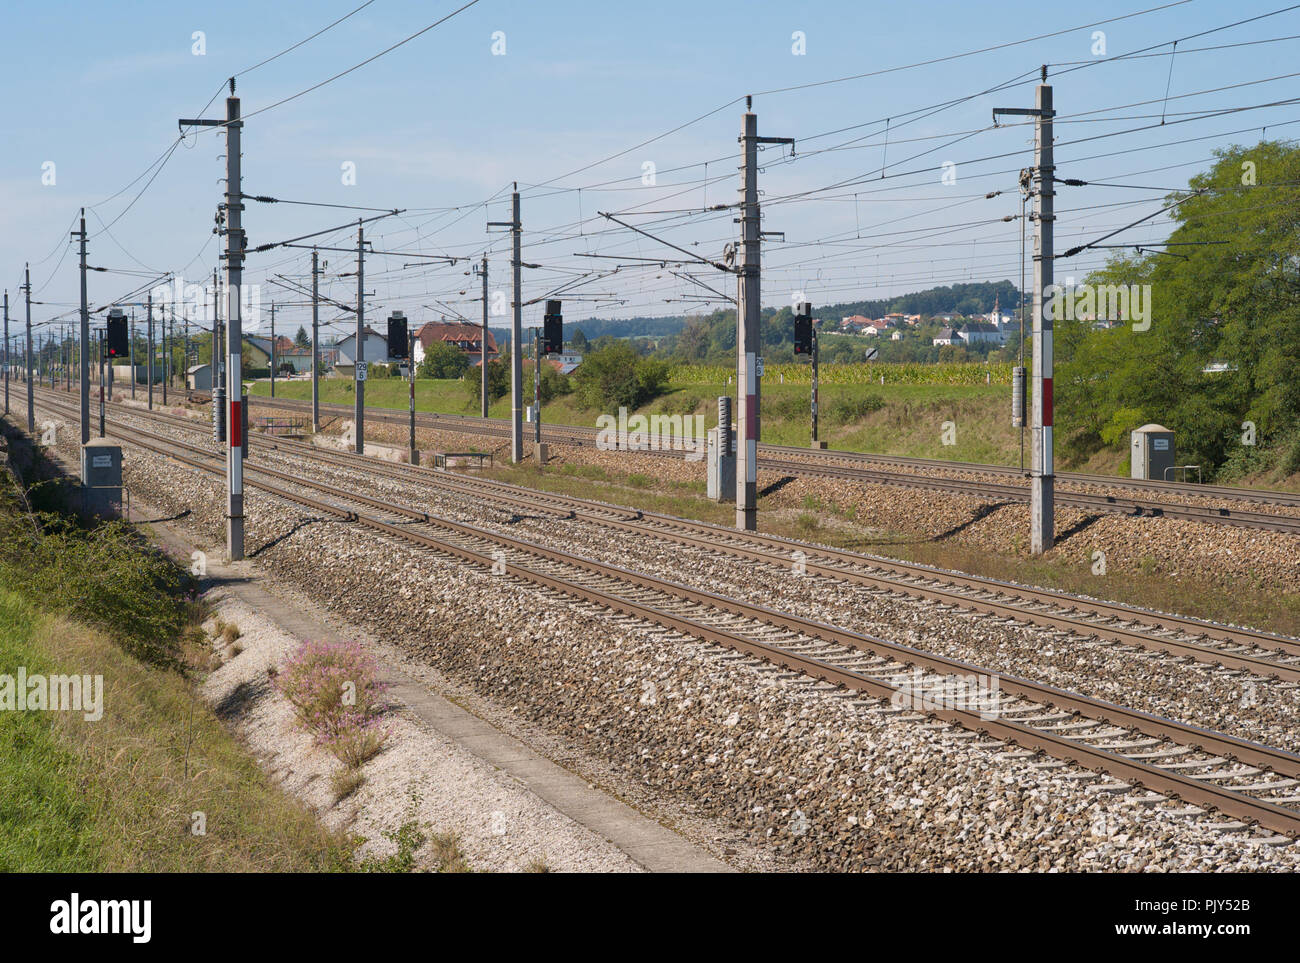 Westbahn Railroad Tracks in the Field in the Mostviertel Region of Lower Austria Stock Photo